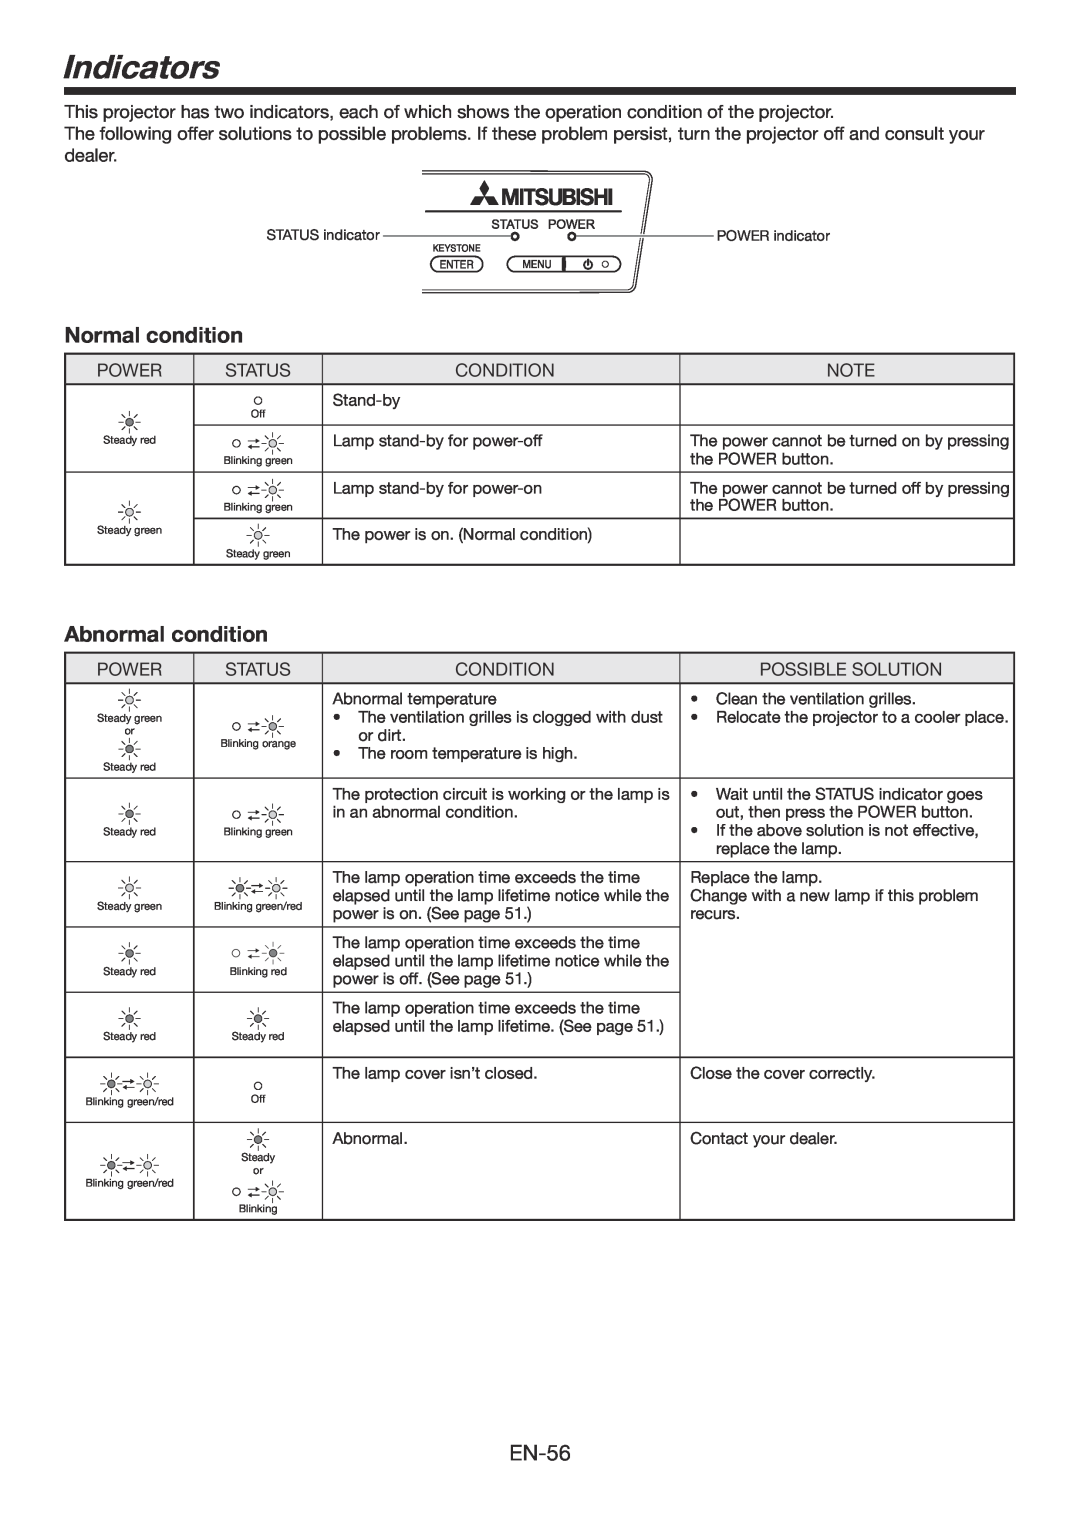 Mitsubishi Electronics WD385U-EST user manual Indicators, Normal condition, Abnormal condition 